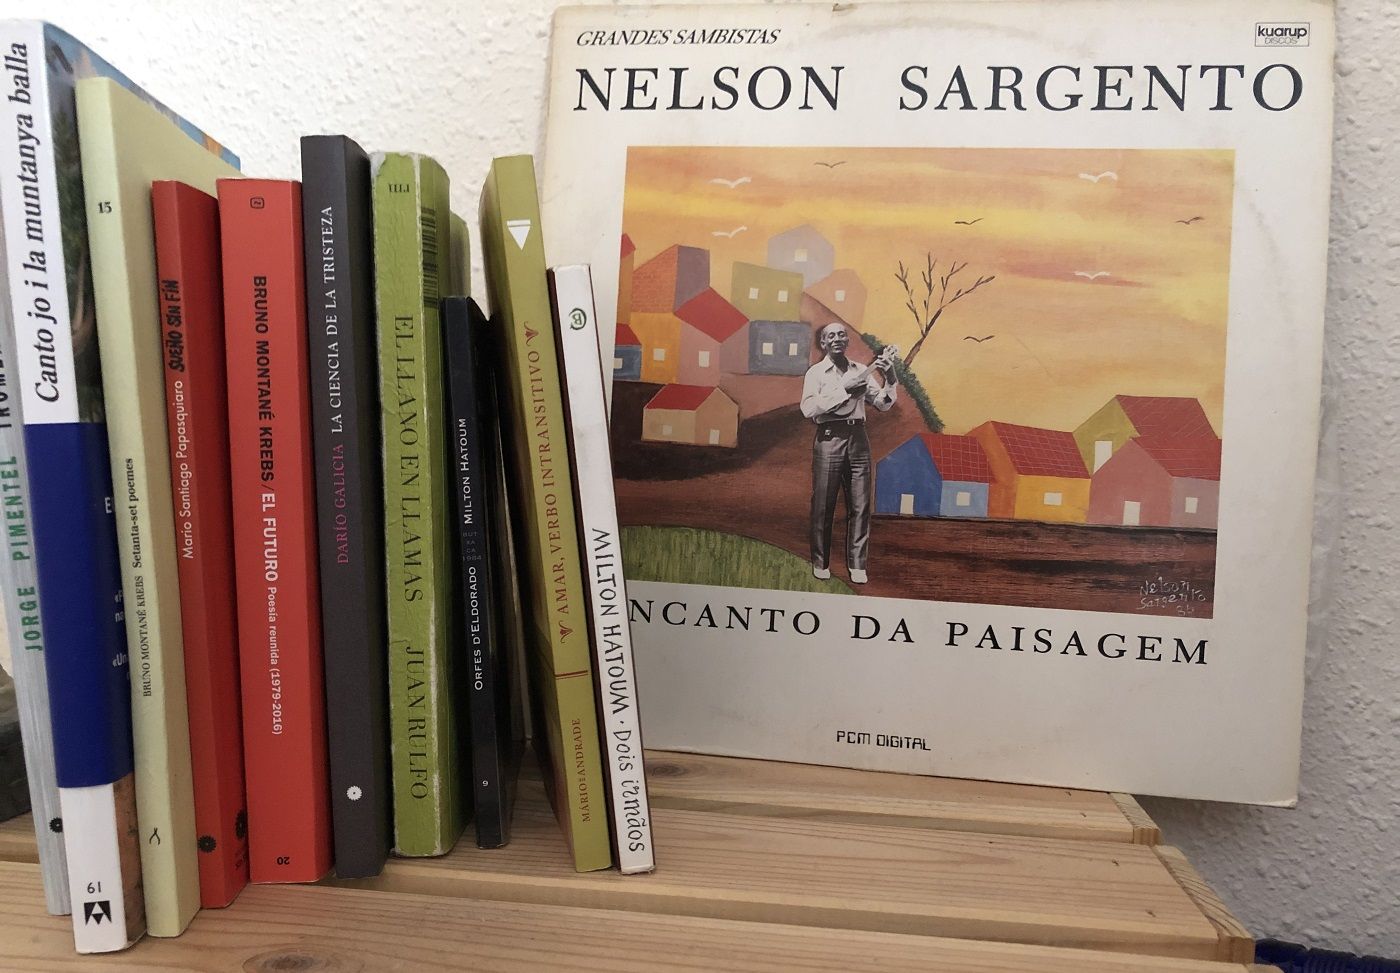 La copia del periodista Germán Aranda del LP 'Encanto da paisagem', de Nelson Sargento. G.A.